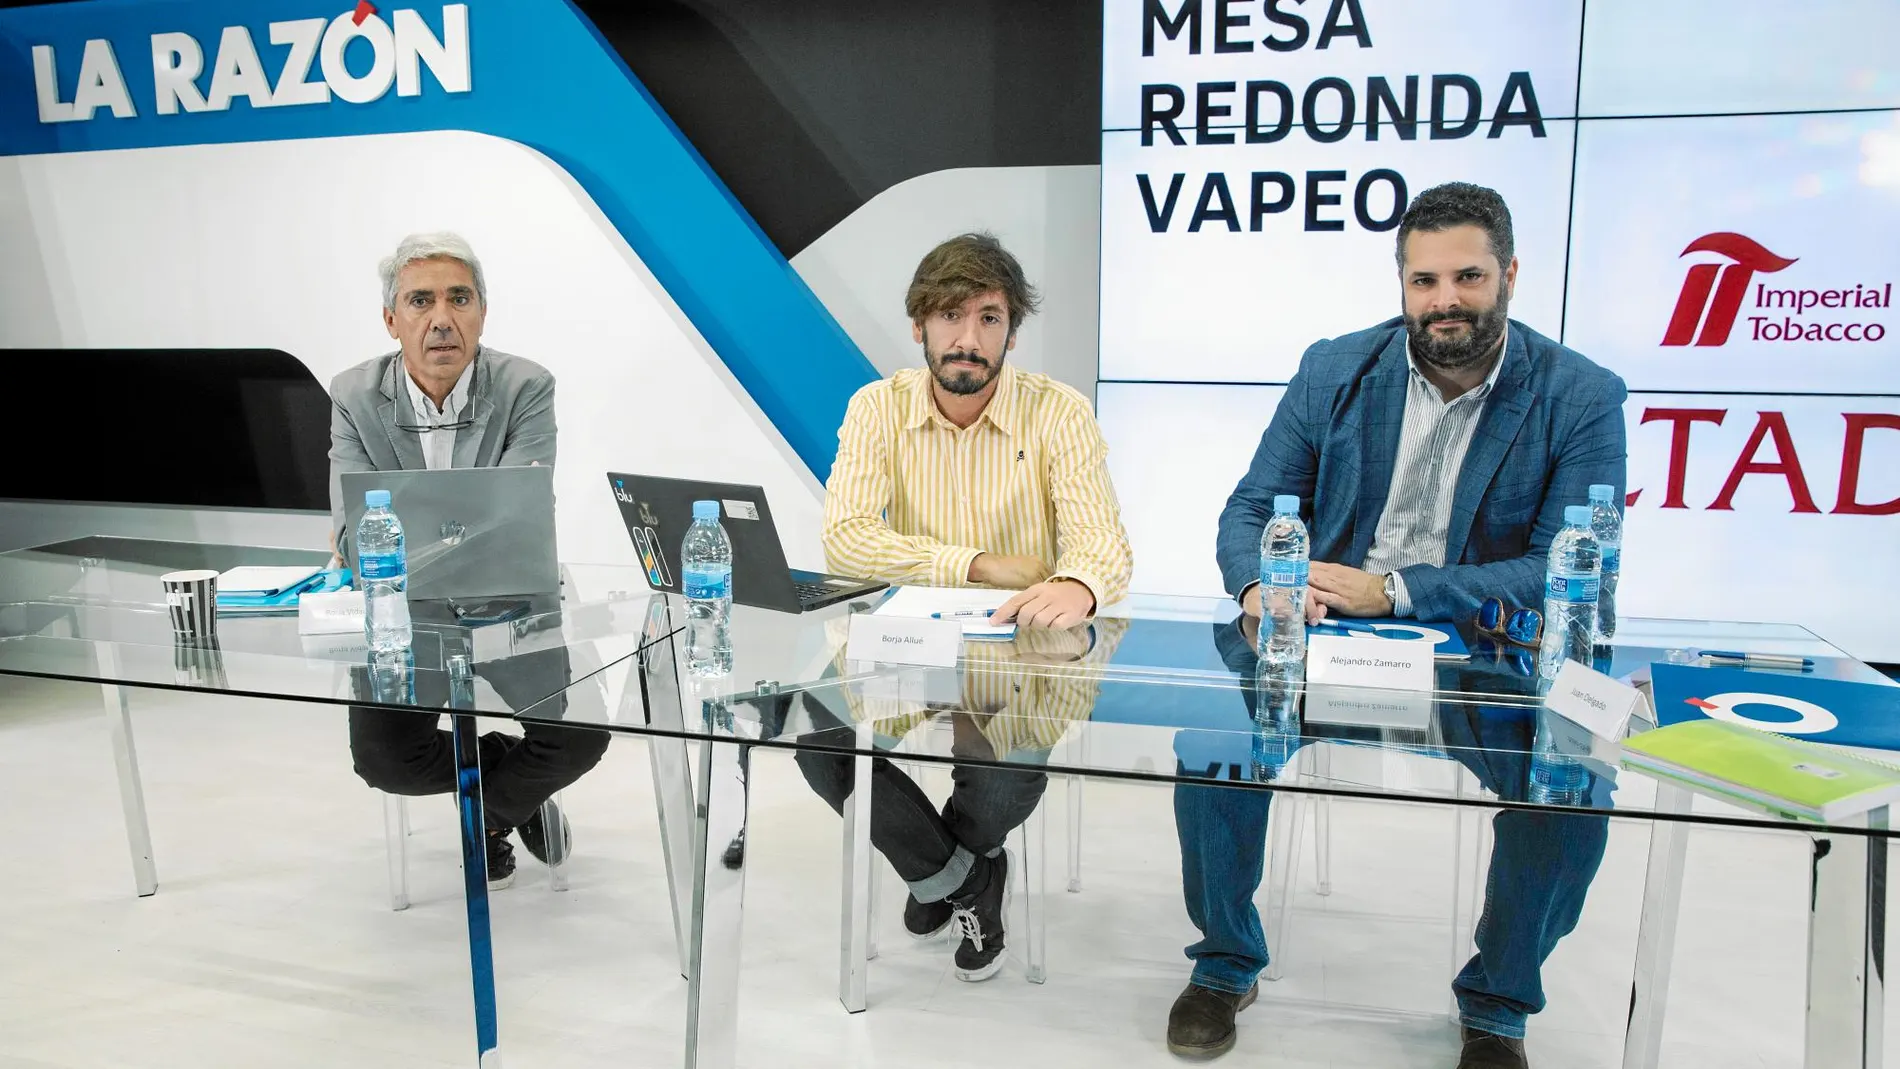 De izquierda a derecha, Borja Vidaurre, Borja Allué y Alejandro Zamarro. Foto: Gonzalo Pérez